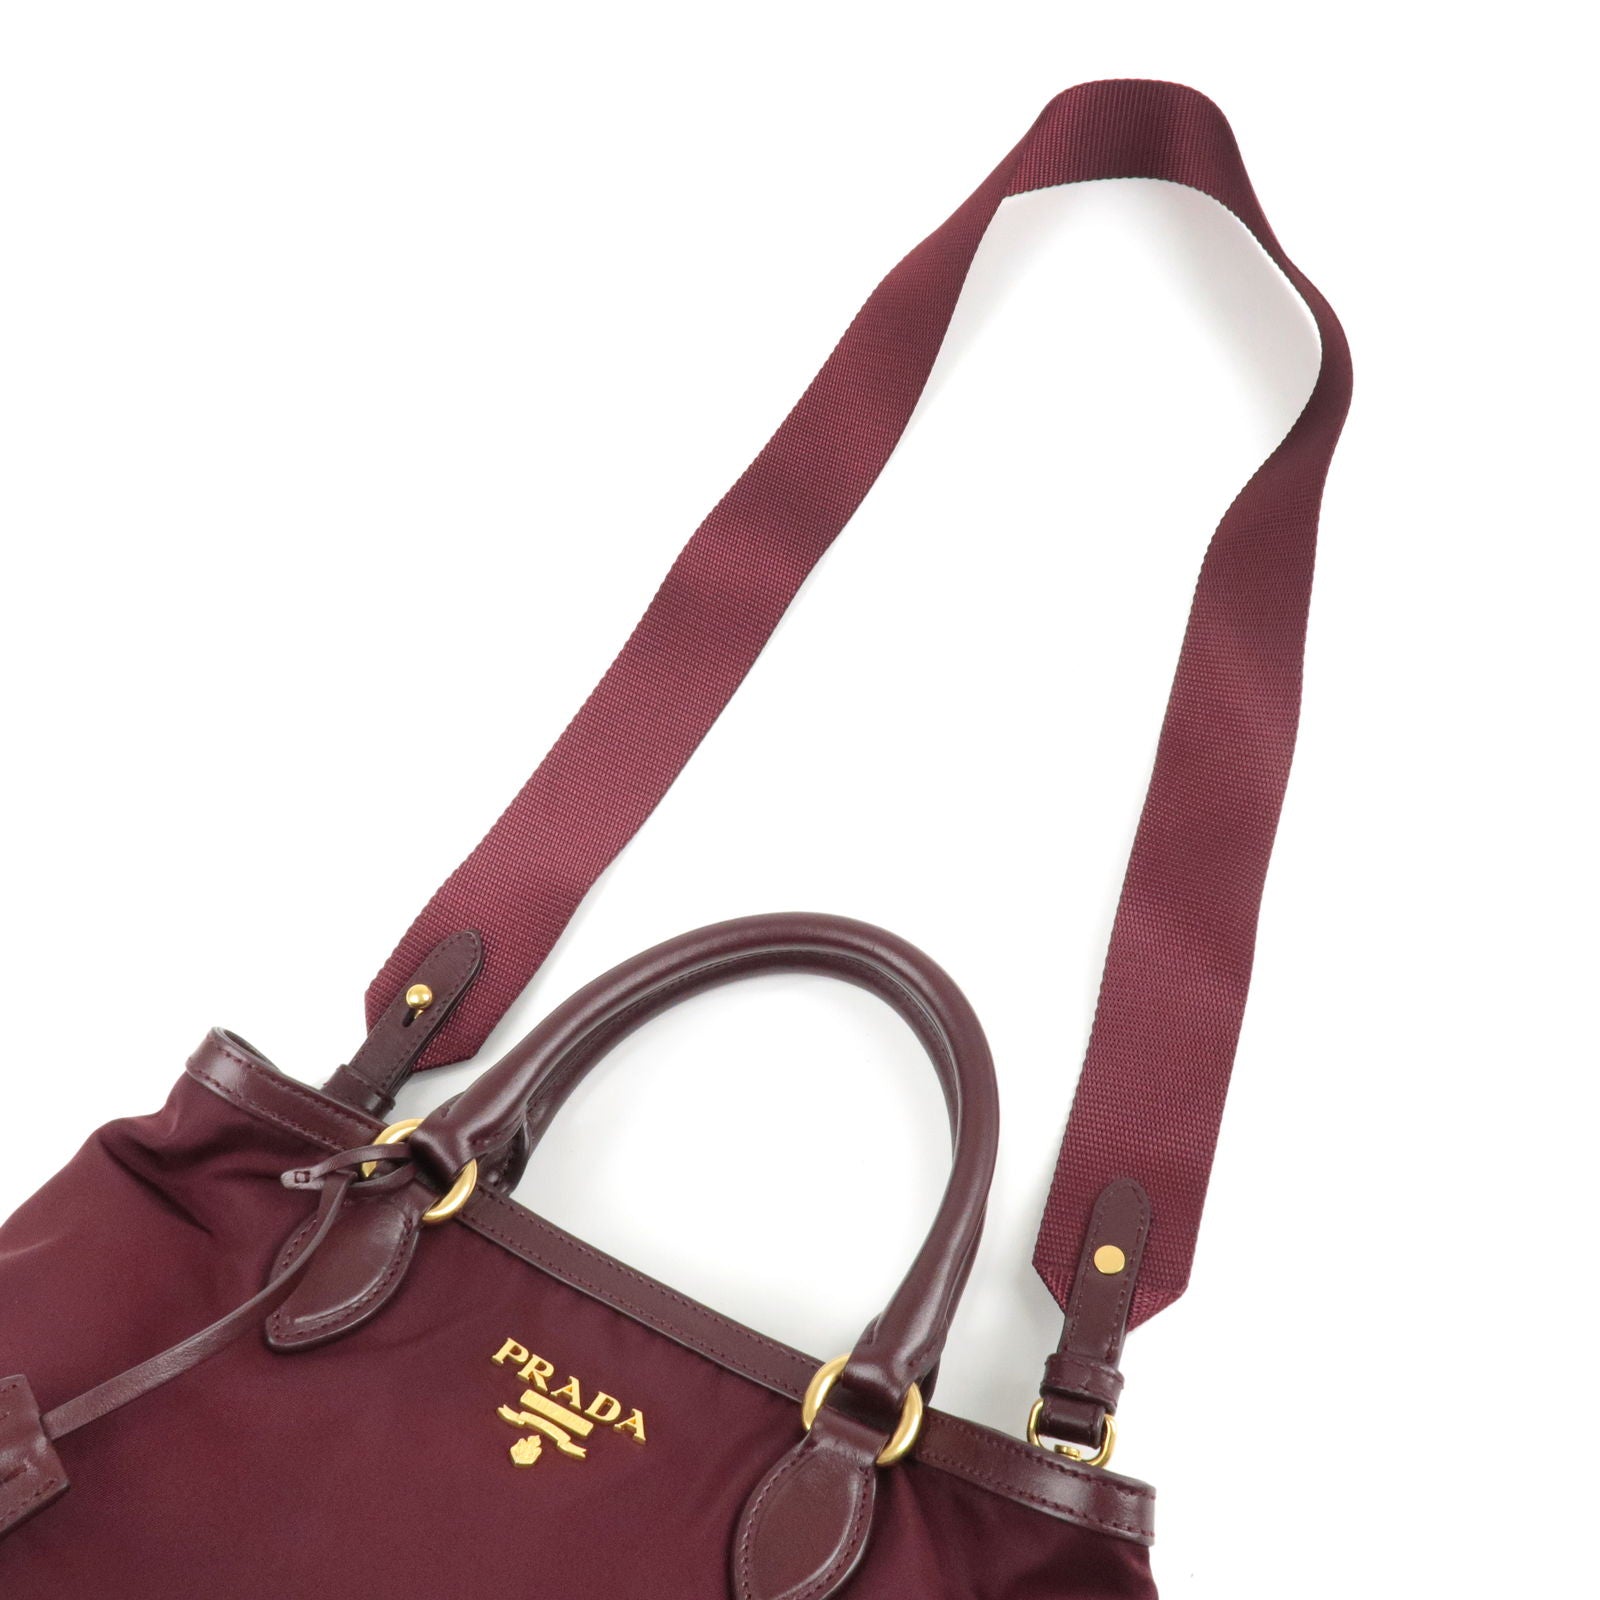 Prada Jaquard Detail Midi Dress - Nylon - Logo - Bordeaux - Bag - Bag -  Leather - Hand - PRADA - 2Way - ep_vintage luxury Store - Granato - 1BA172  – dct